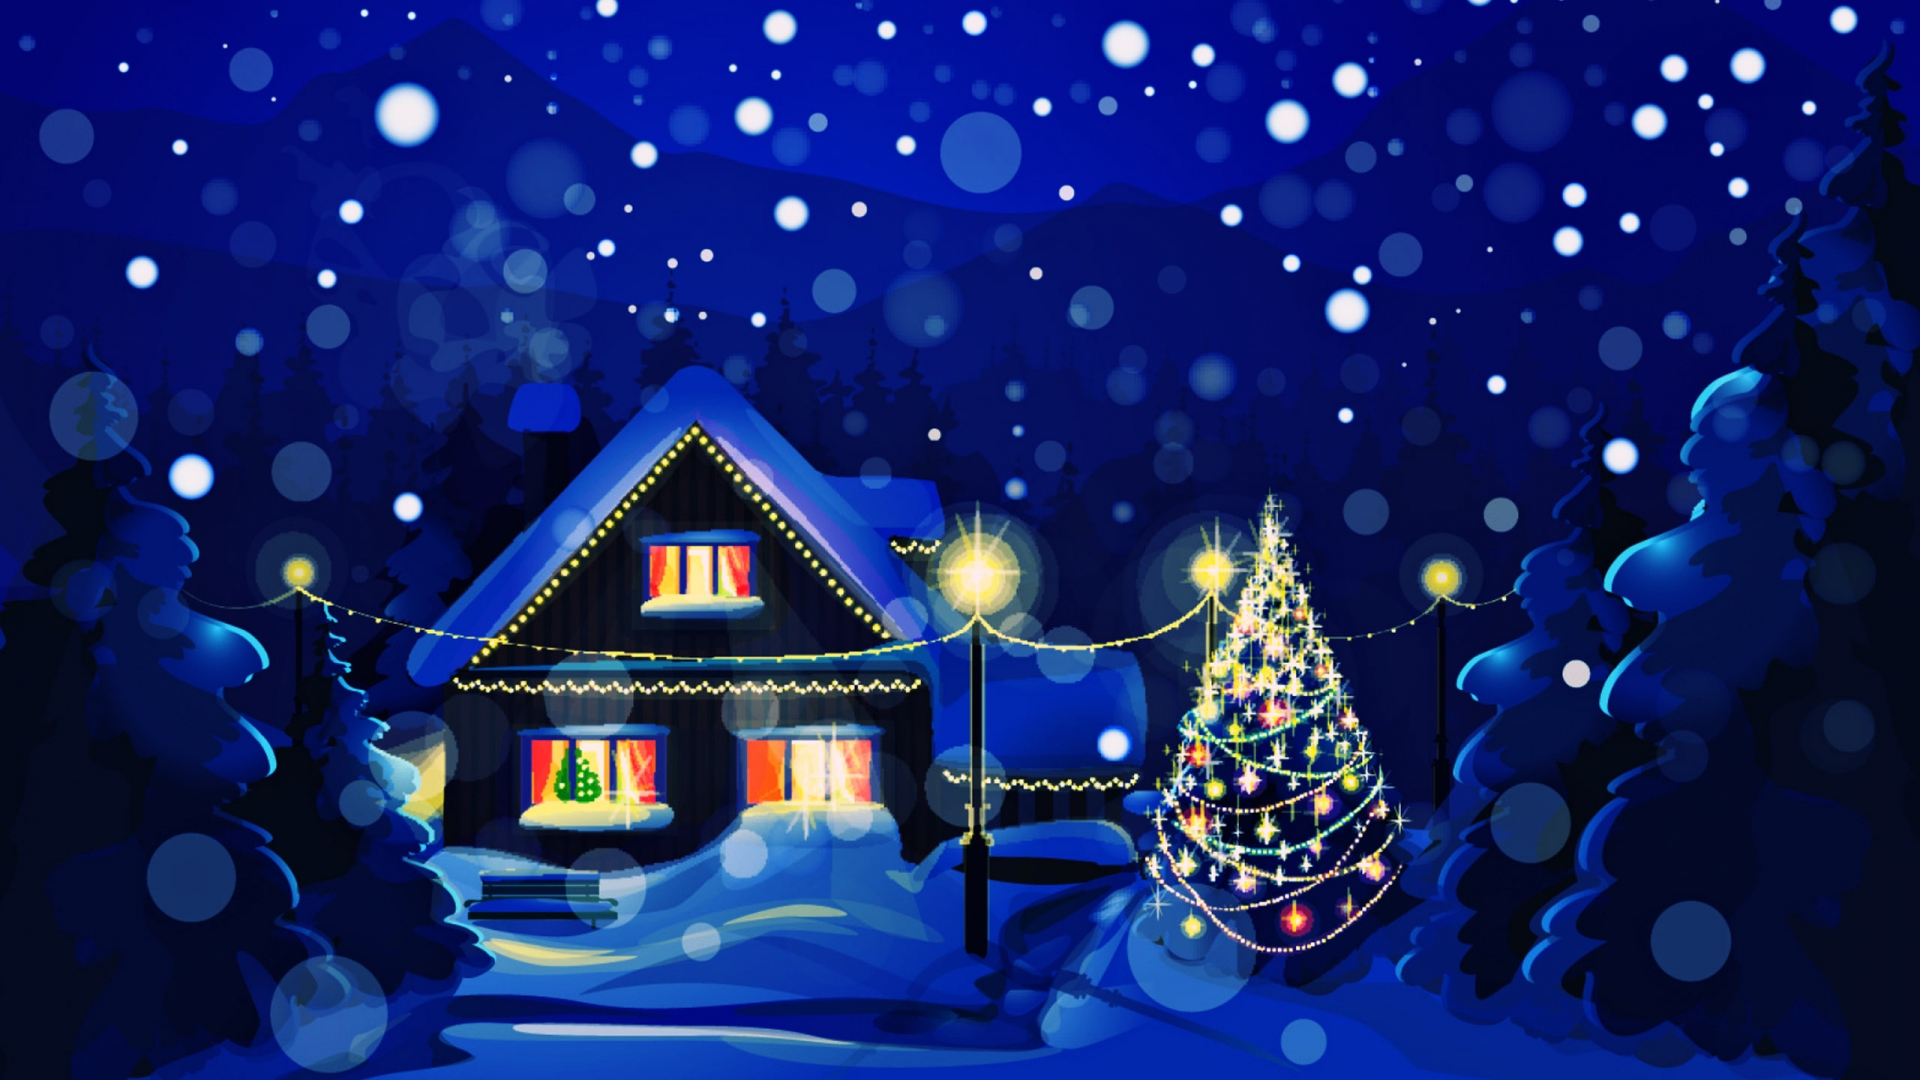 CHRISTMAS CHRISTMAS WINTER NIGHT BLUE DESKTOP BACKGROUND WALLPAPER ...